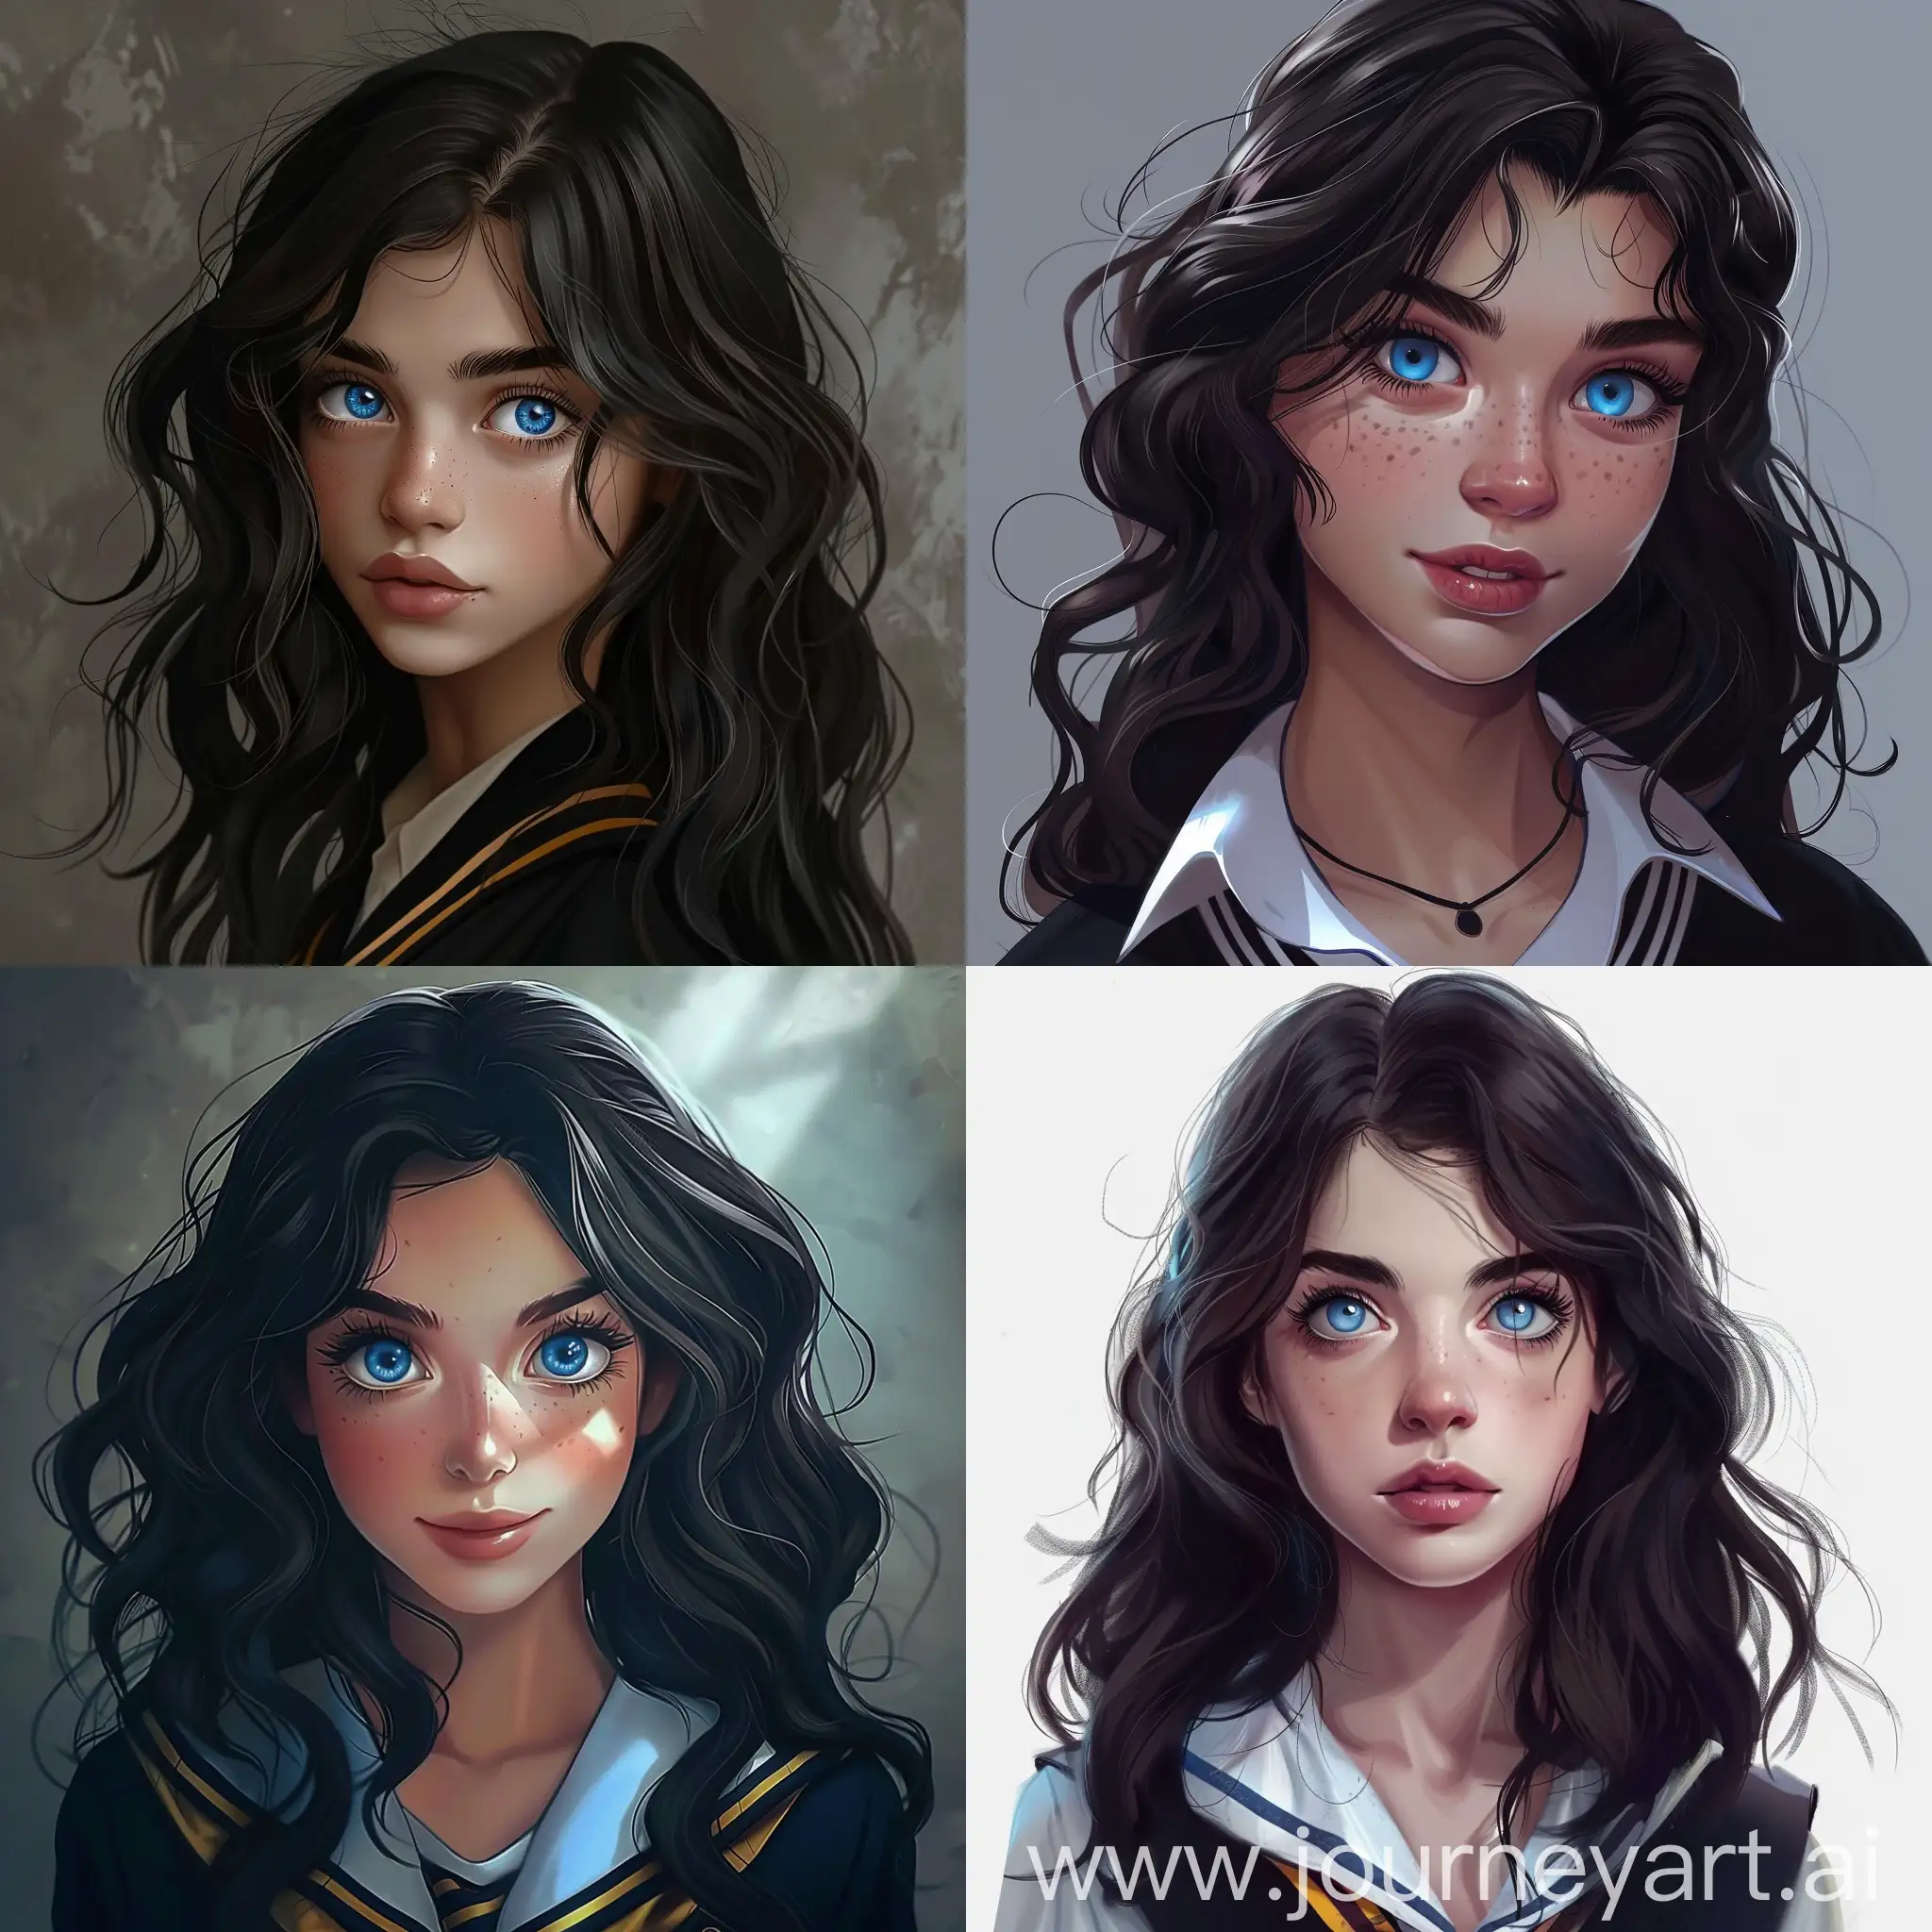 Beautiful girl, dark hair, blue eyes, white skin, teenager, 15 years old, Hogwarts student, Ravenclaw, high quality, high detail, cartoon art